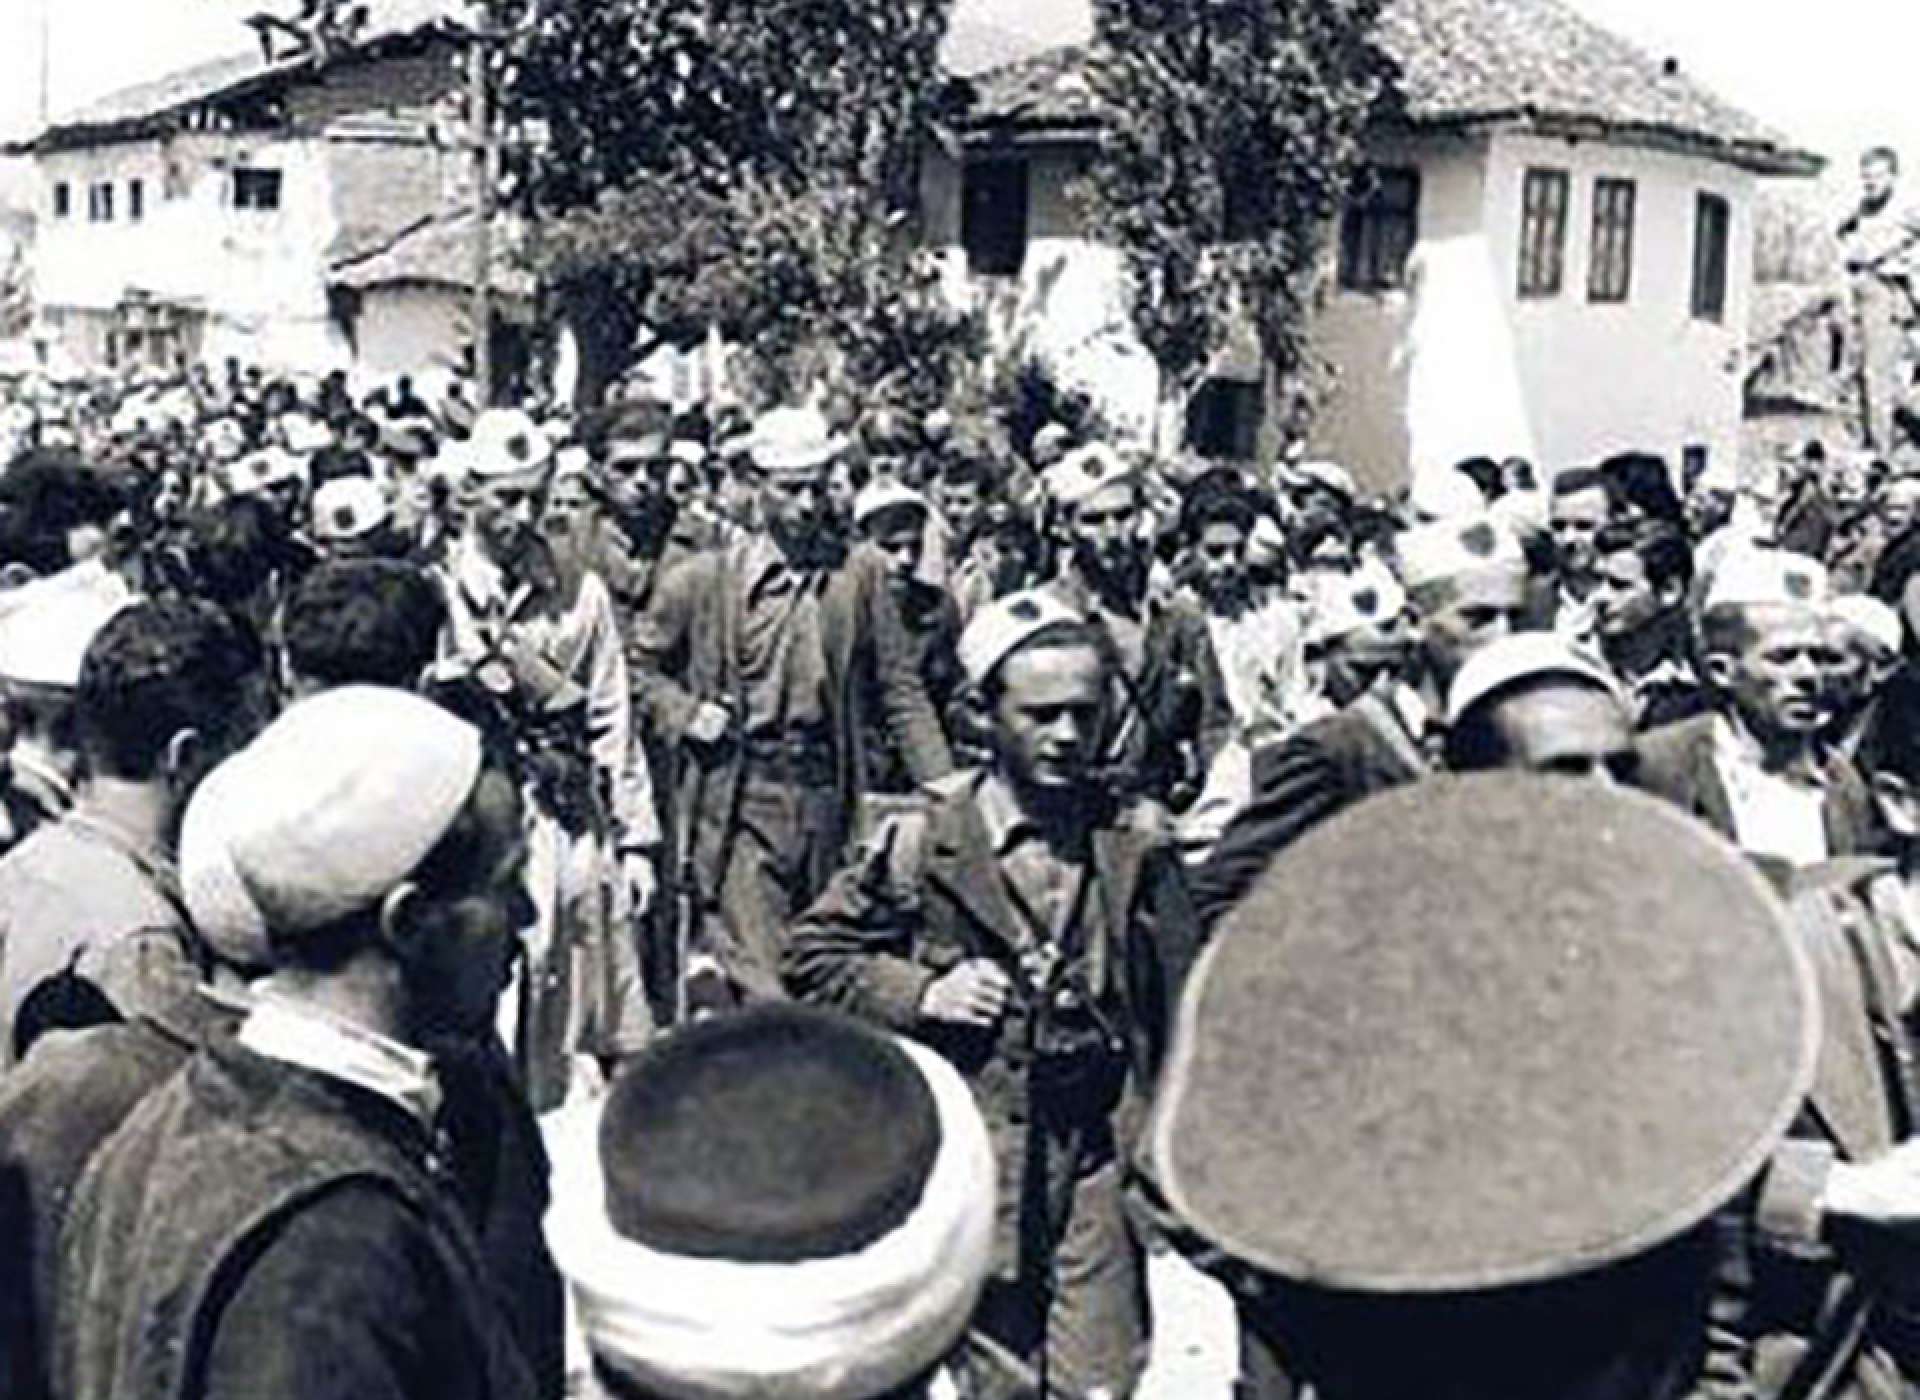 Balli Kombetar forces enter Prizren 1944